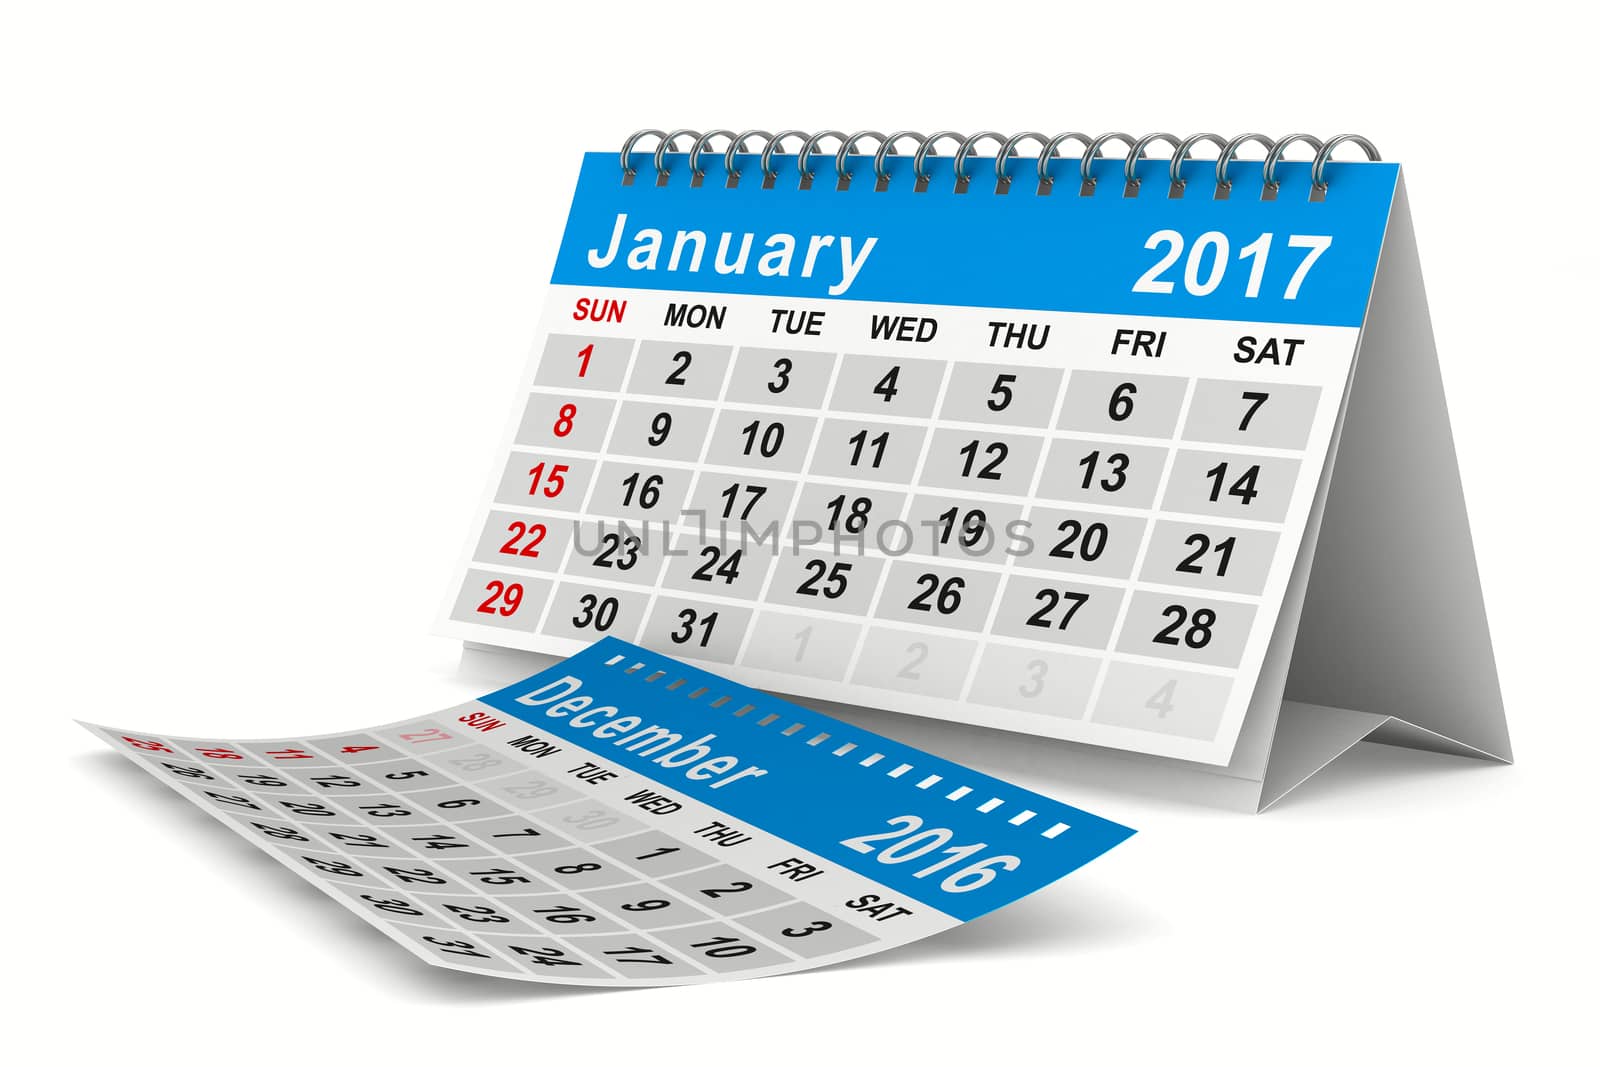 2017 year calendar. January. Isolated 3D image